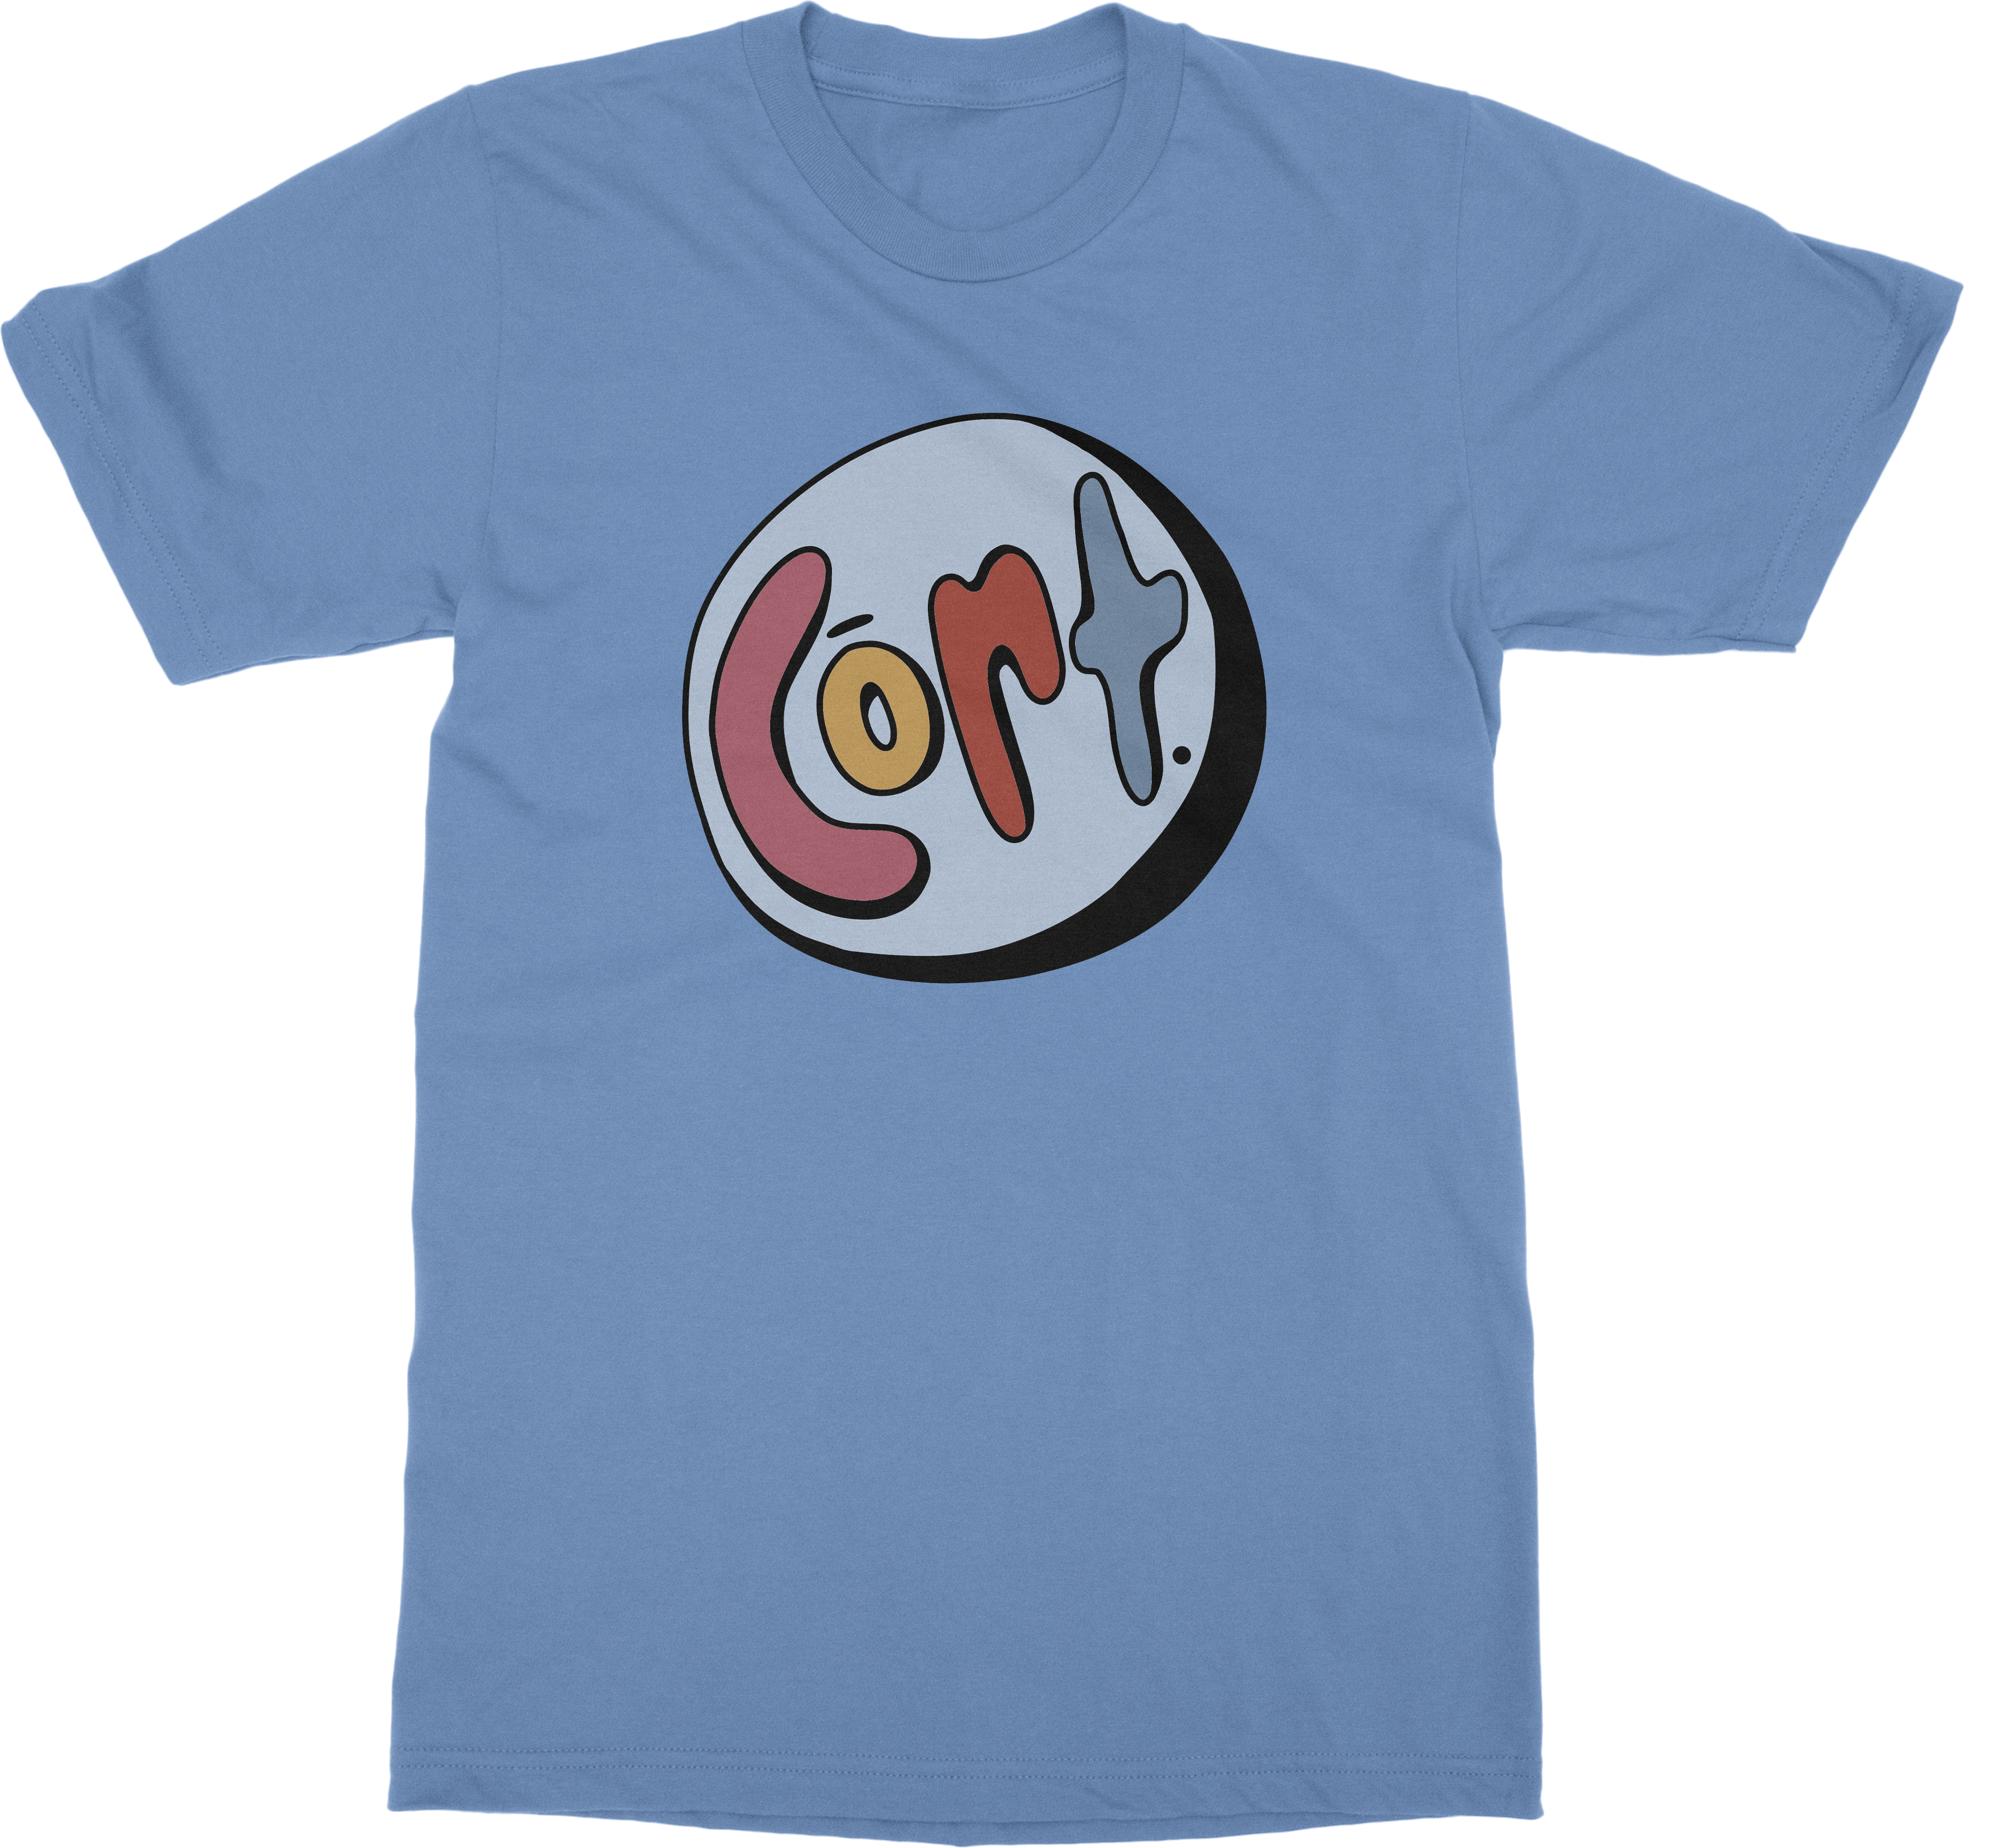 Cort | Circle T-Shirt - Blue DTG